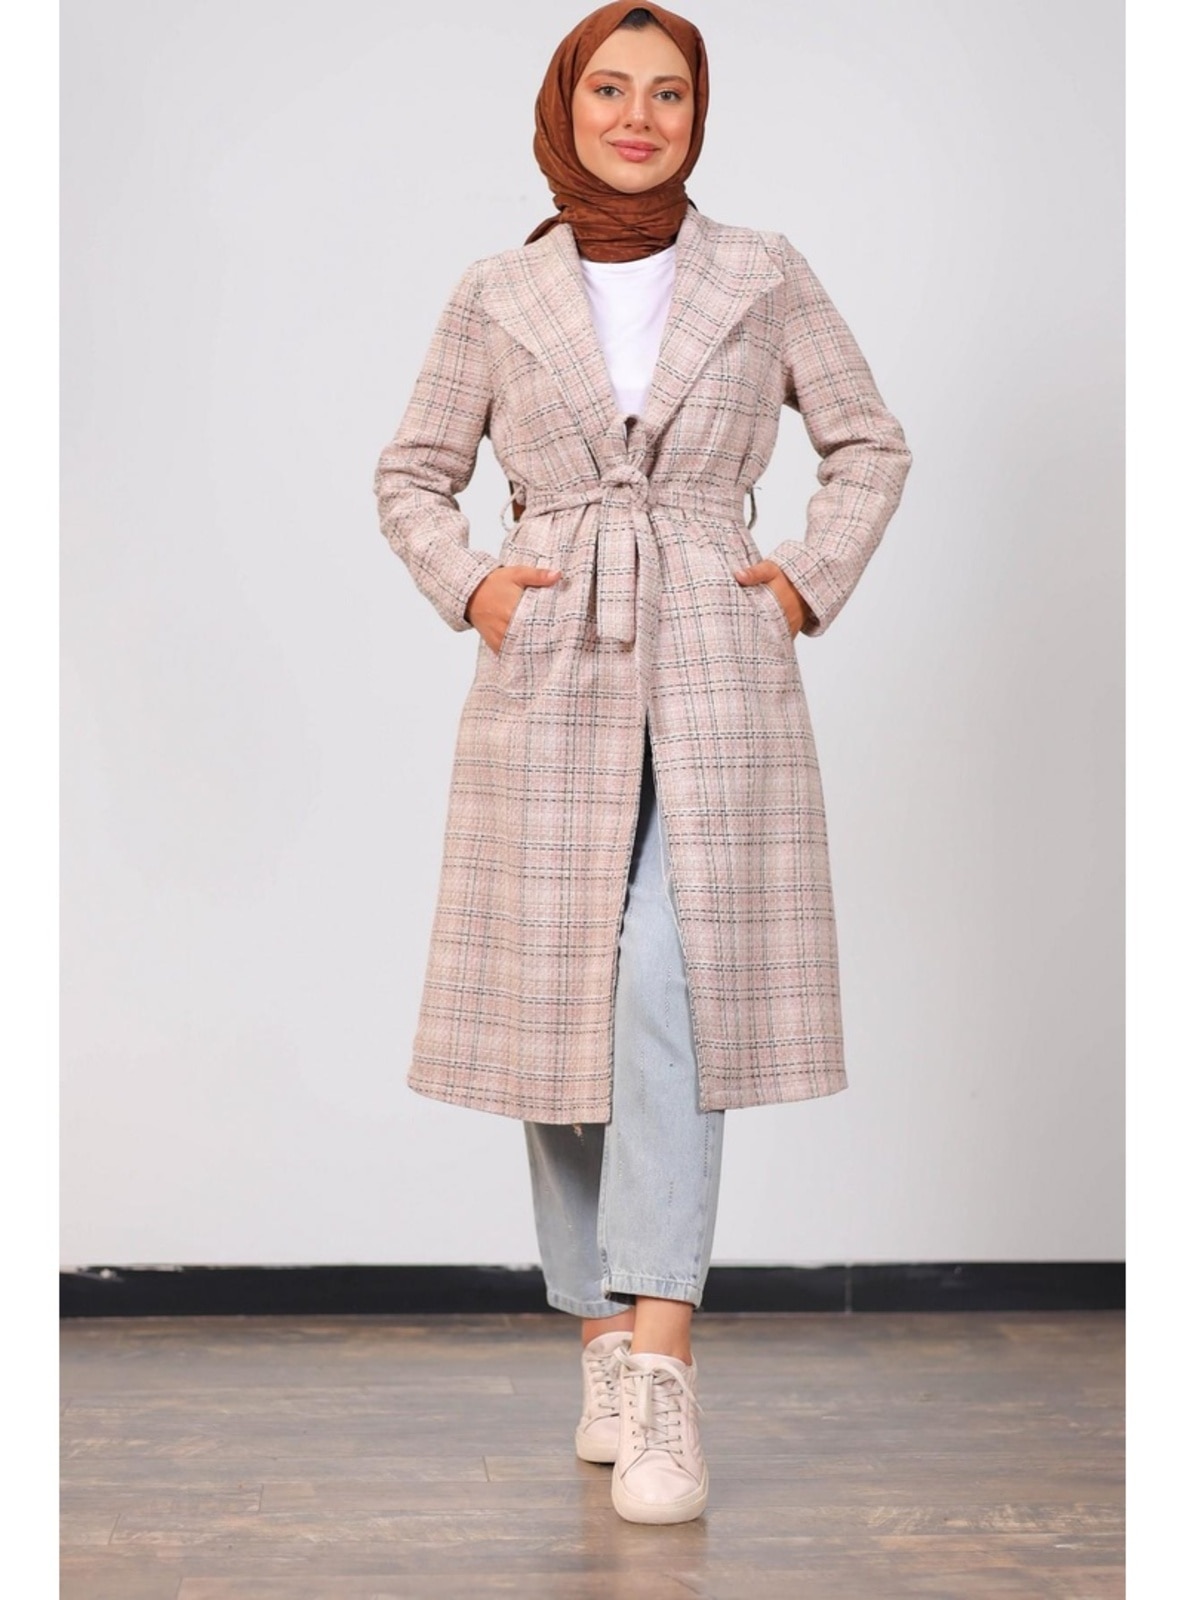 Best Stylish Coats For Autumn Winter 2022 - Hijab Fashion Inspiration